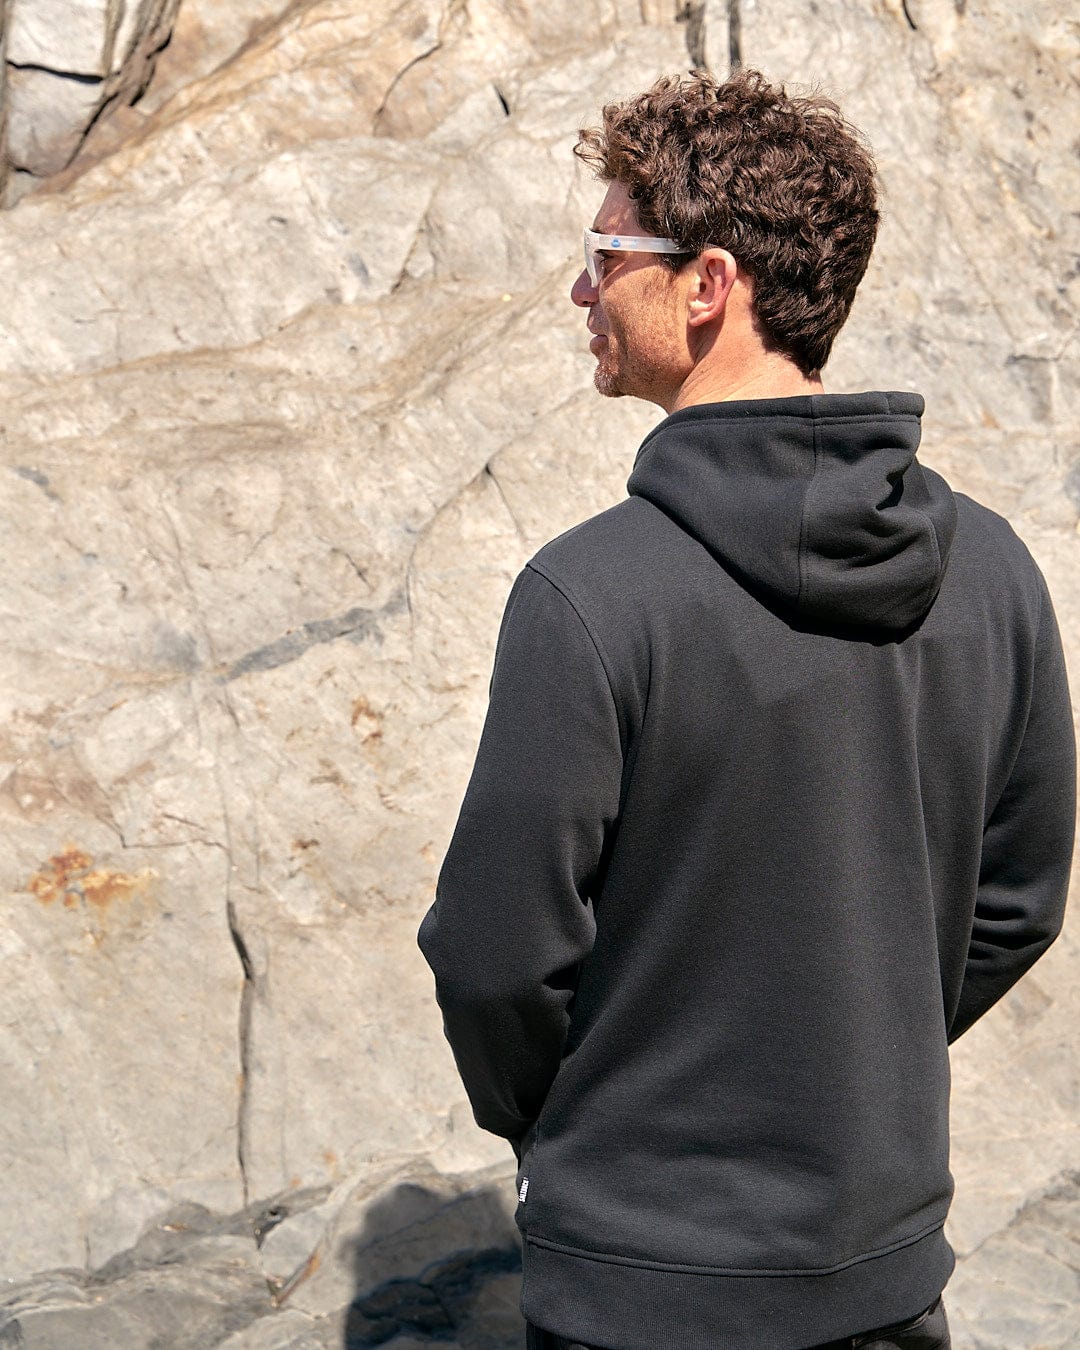 A man wearing a Saltrock Poolside - Mens Pop Hoodie - Black standing next to a rock.